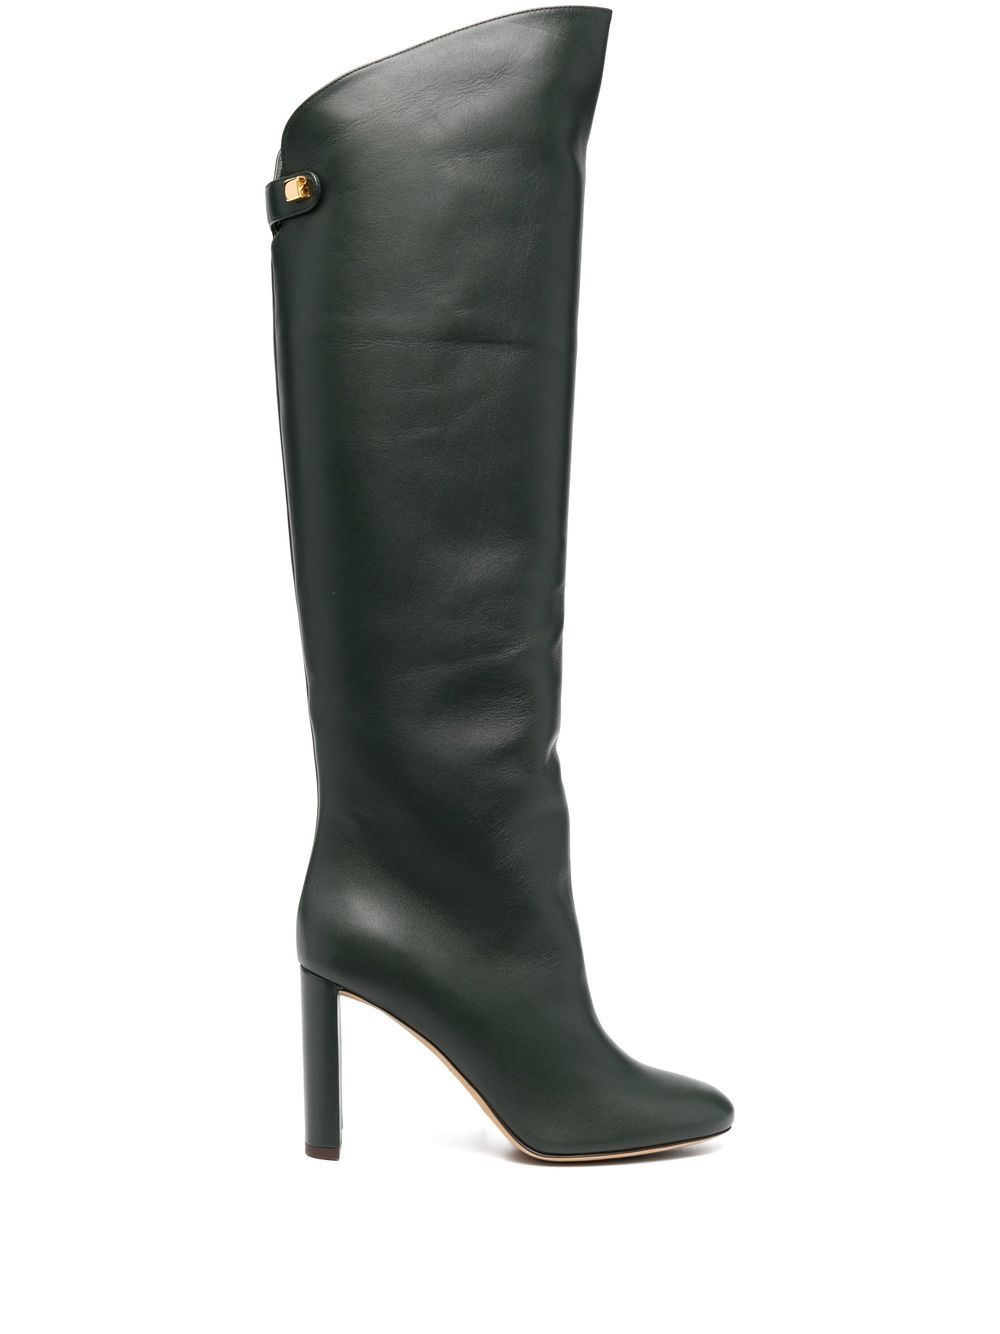 Maison Skorpios knee-high leather boots - Verde